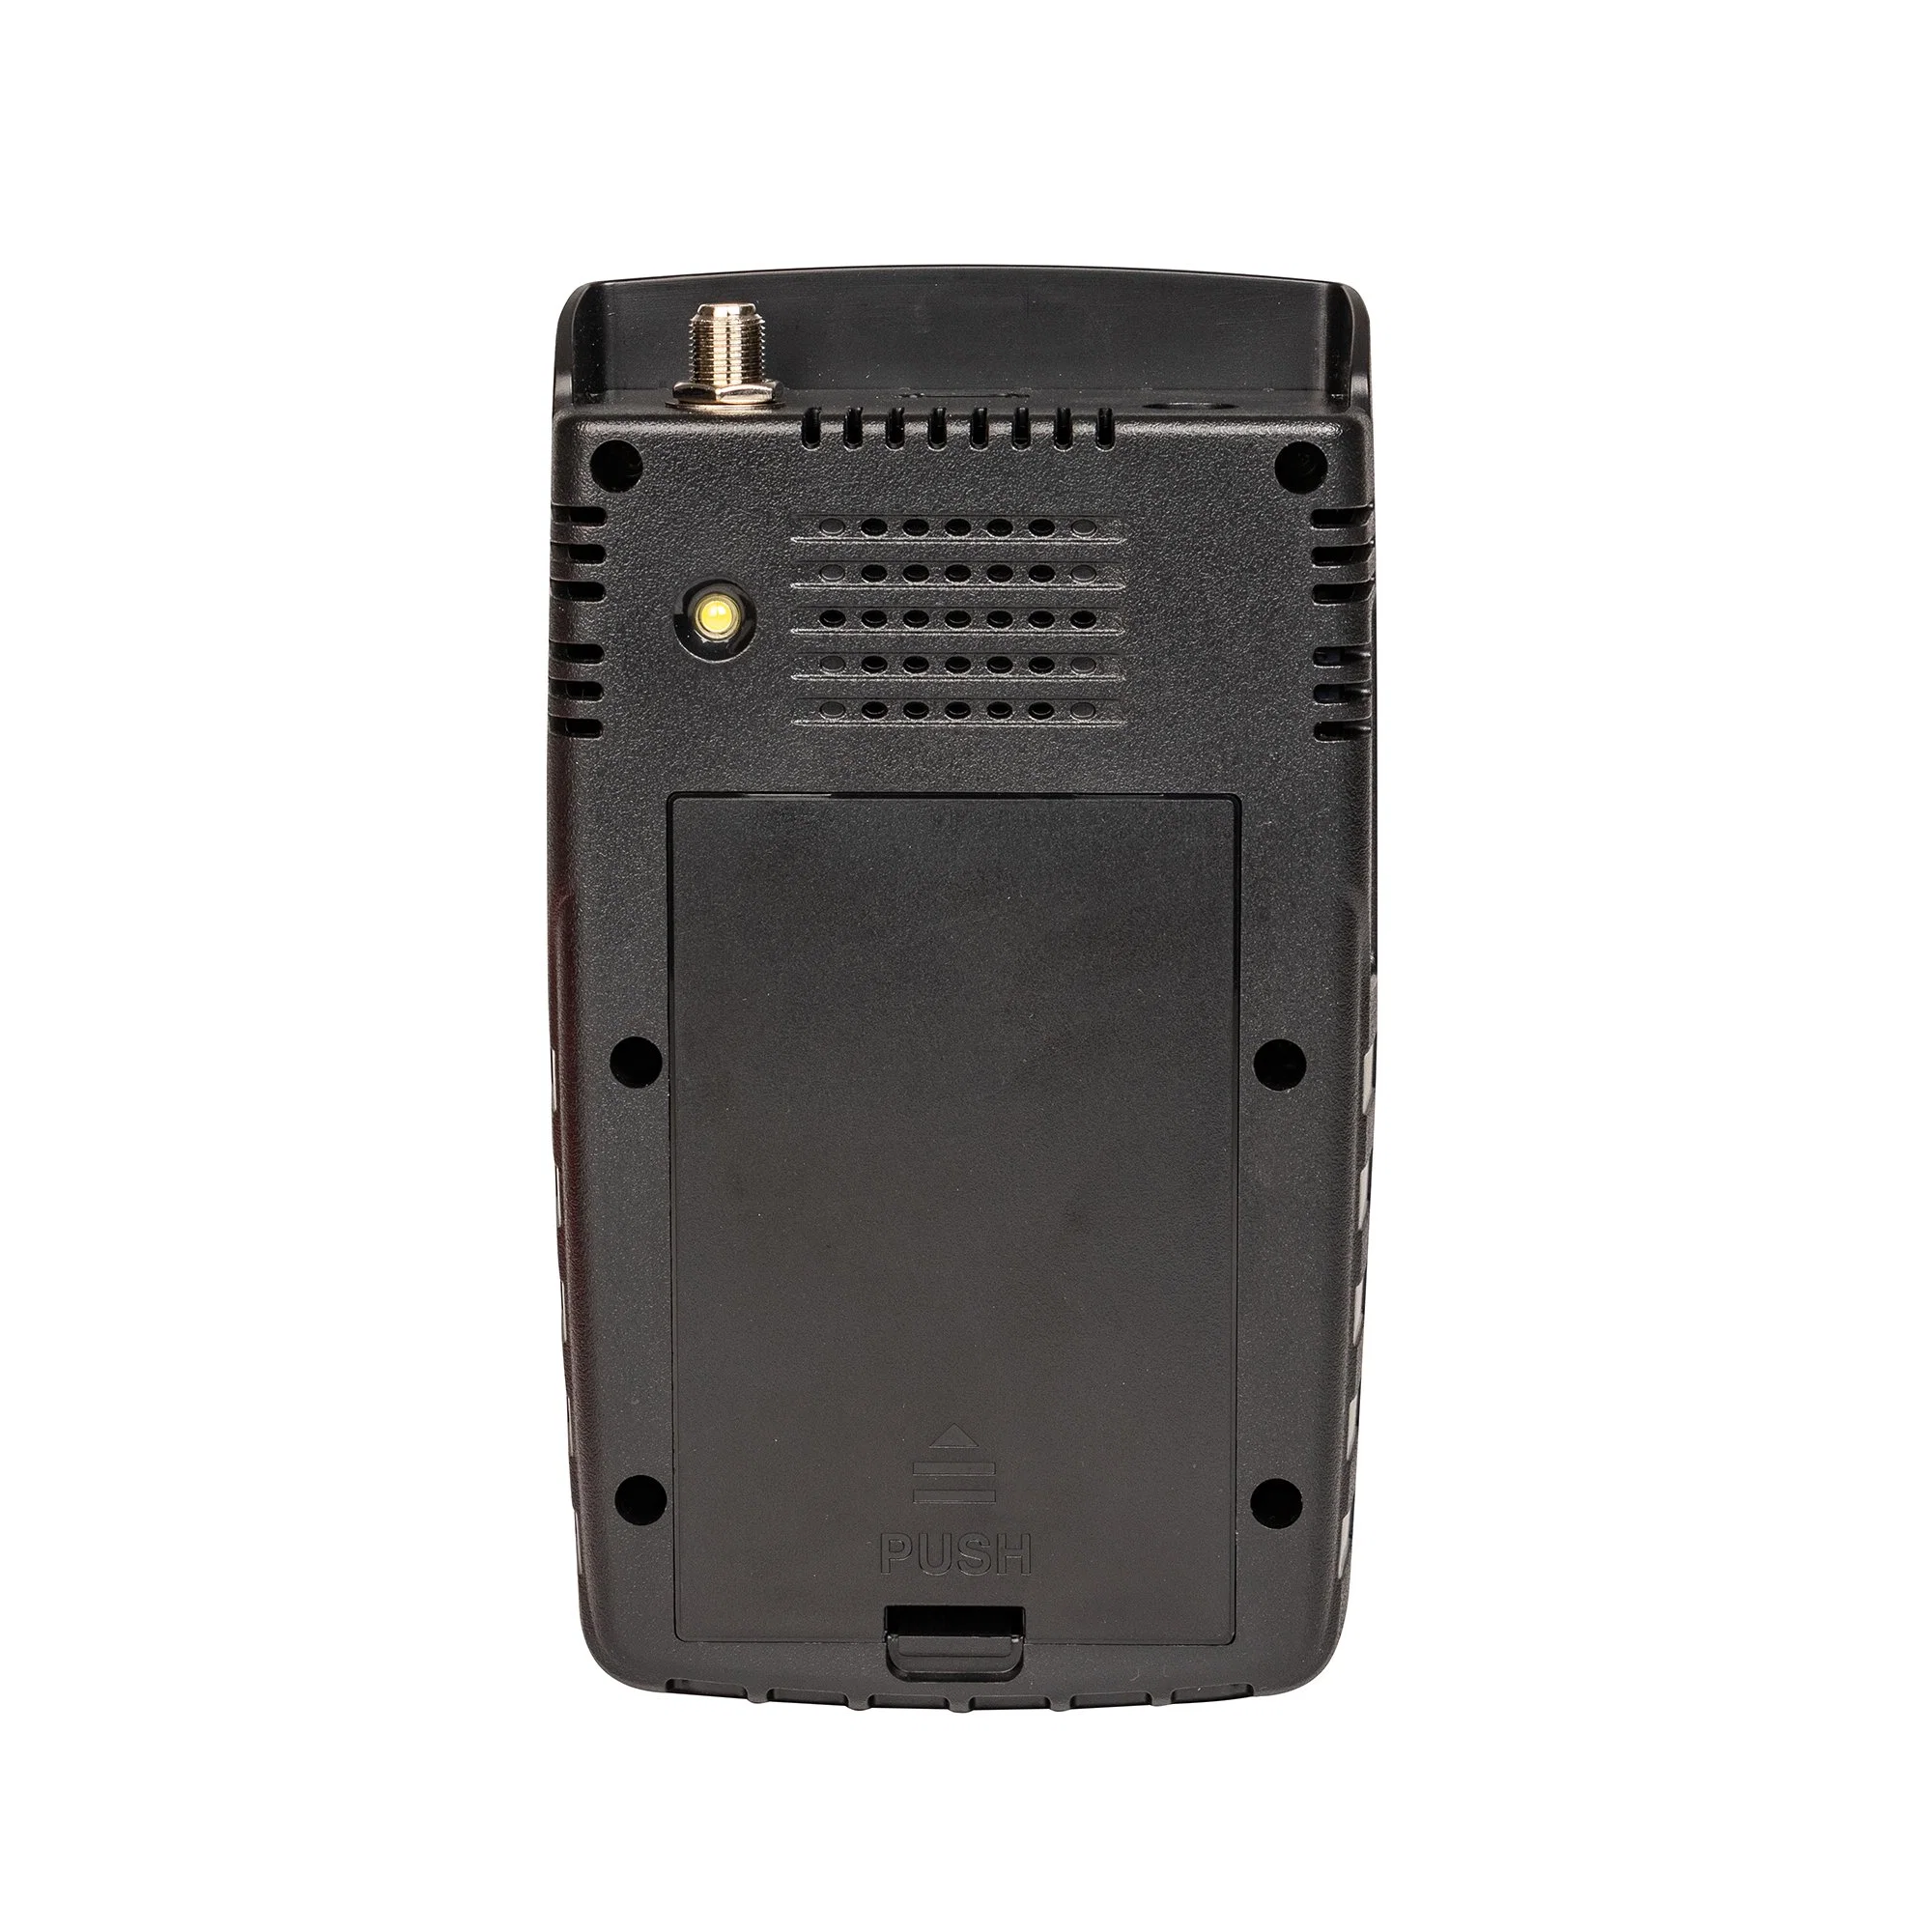 WS-695 DVB-T/T2 Satellite Finder H265 يدعم جهاز القياس الرقمي إشارة DVB-T/T2 خرج تيار مستمر قياسي بجهد 12 فولت للشاشة